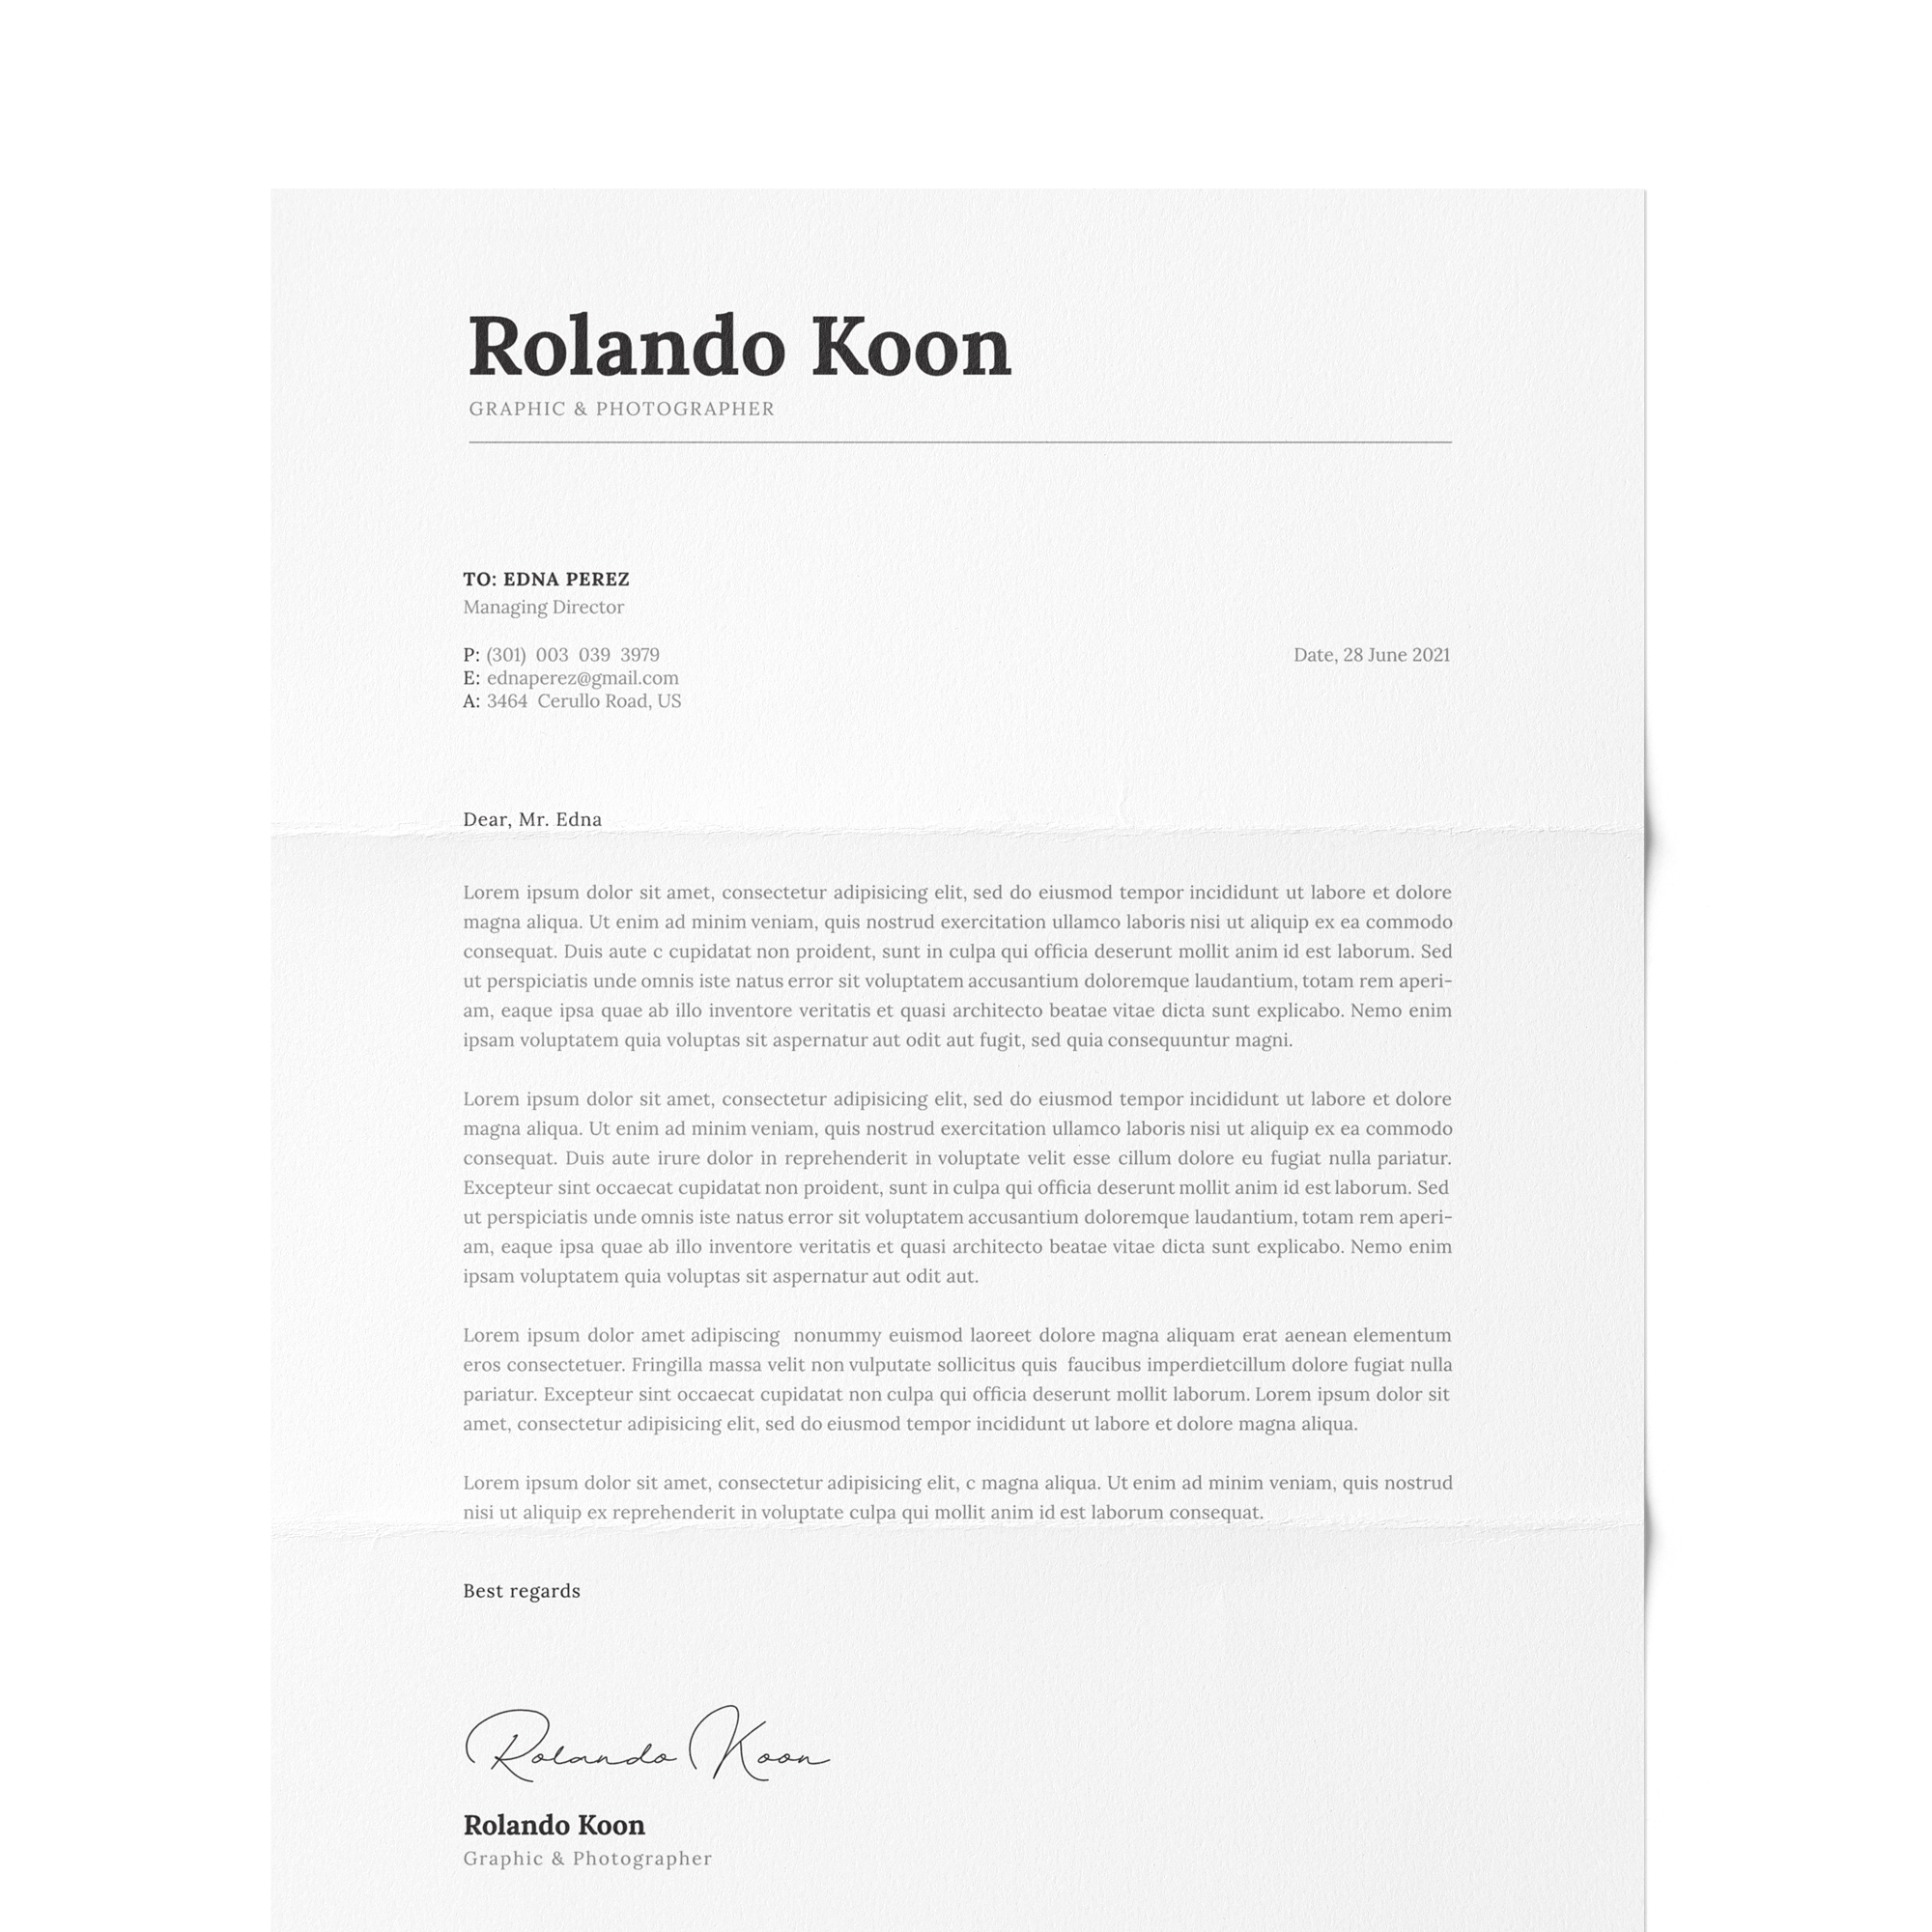 CV #66 Rolando Koon